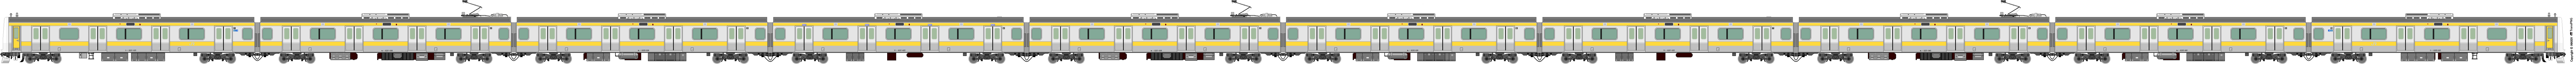 5033 - [5033] East Japan Railway 52163097465_d0342223b1_o